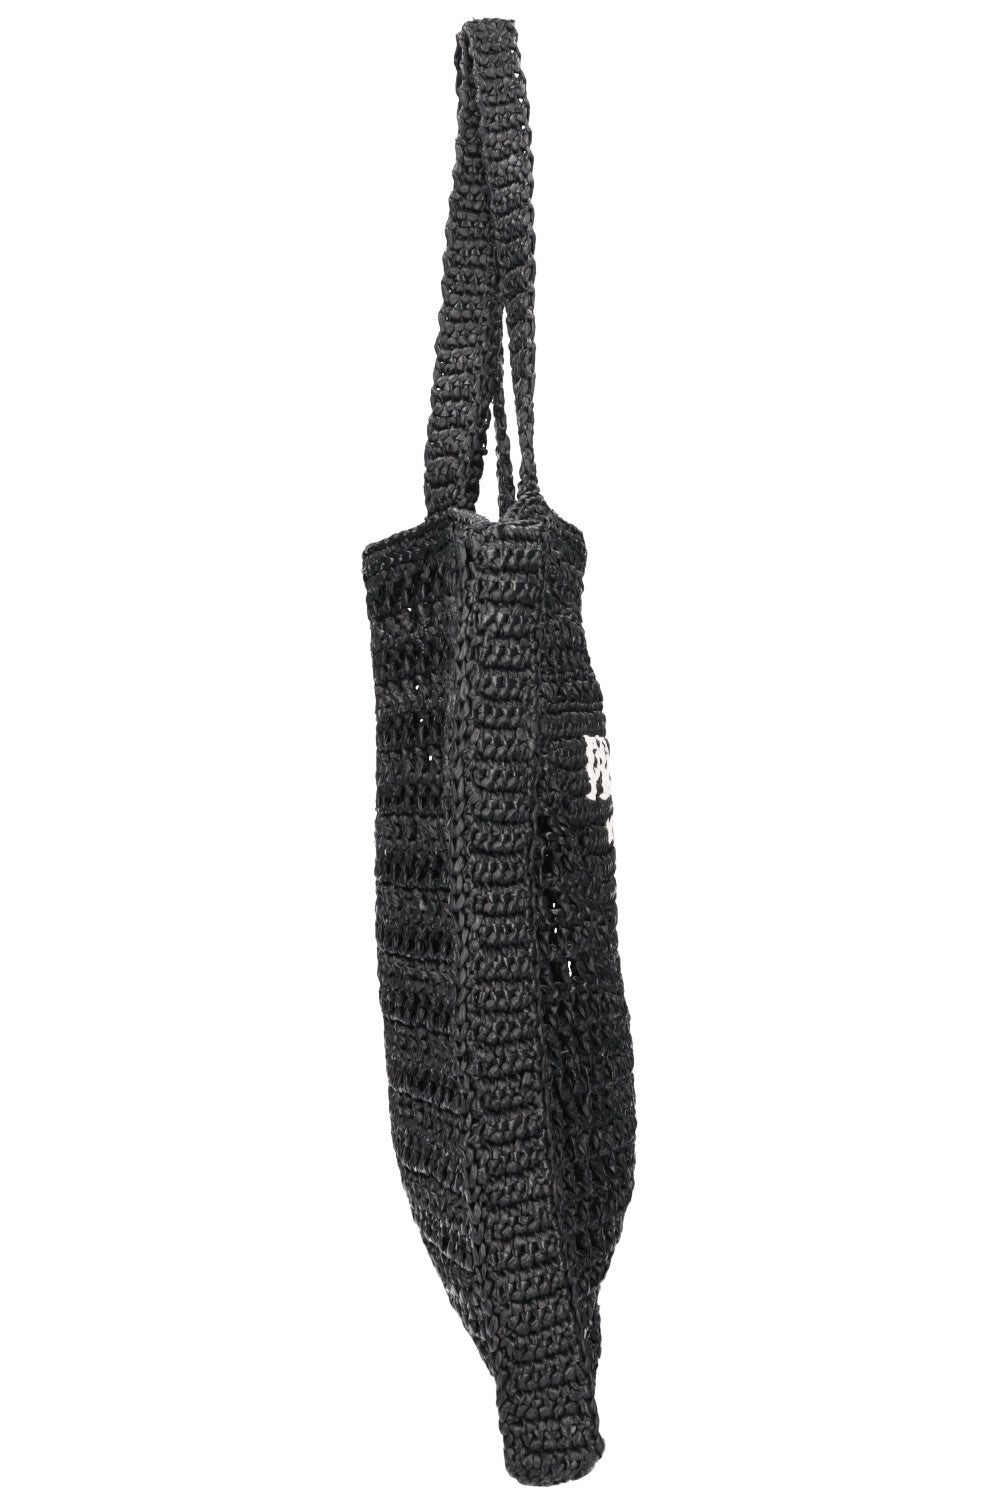 PRADA Crochet Raffia Tote Bag Black